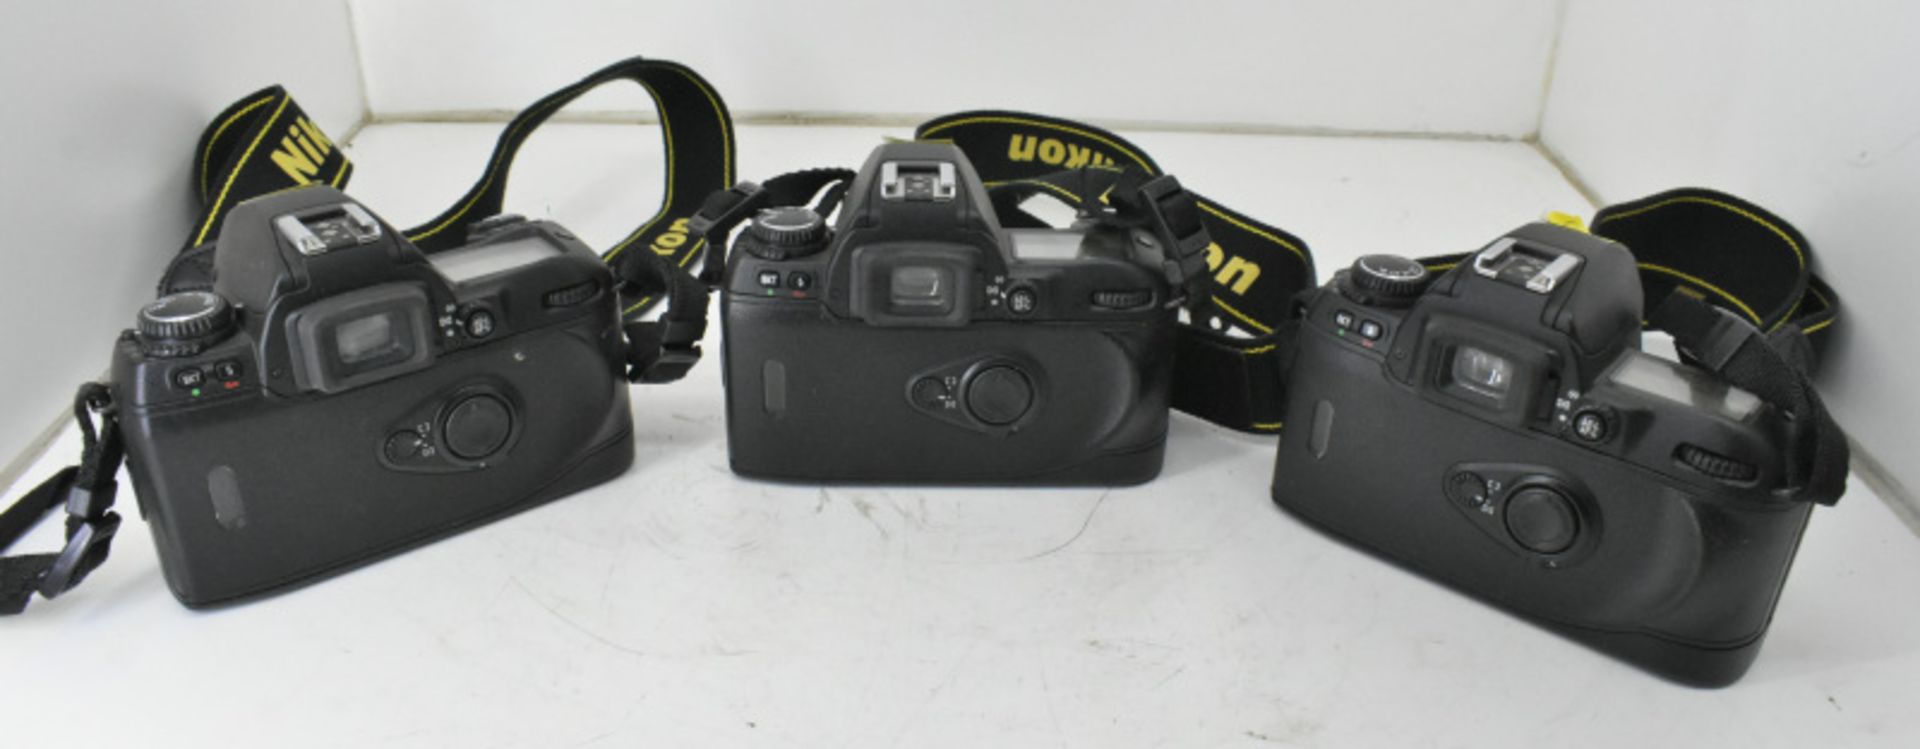 3x Nikon F80 Film Camera Bodies - Image 2 of 2